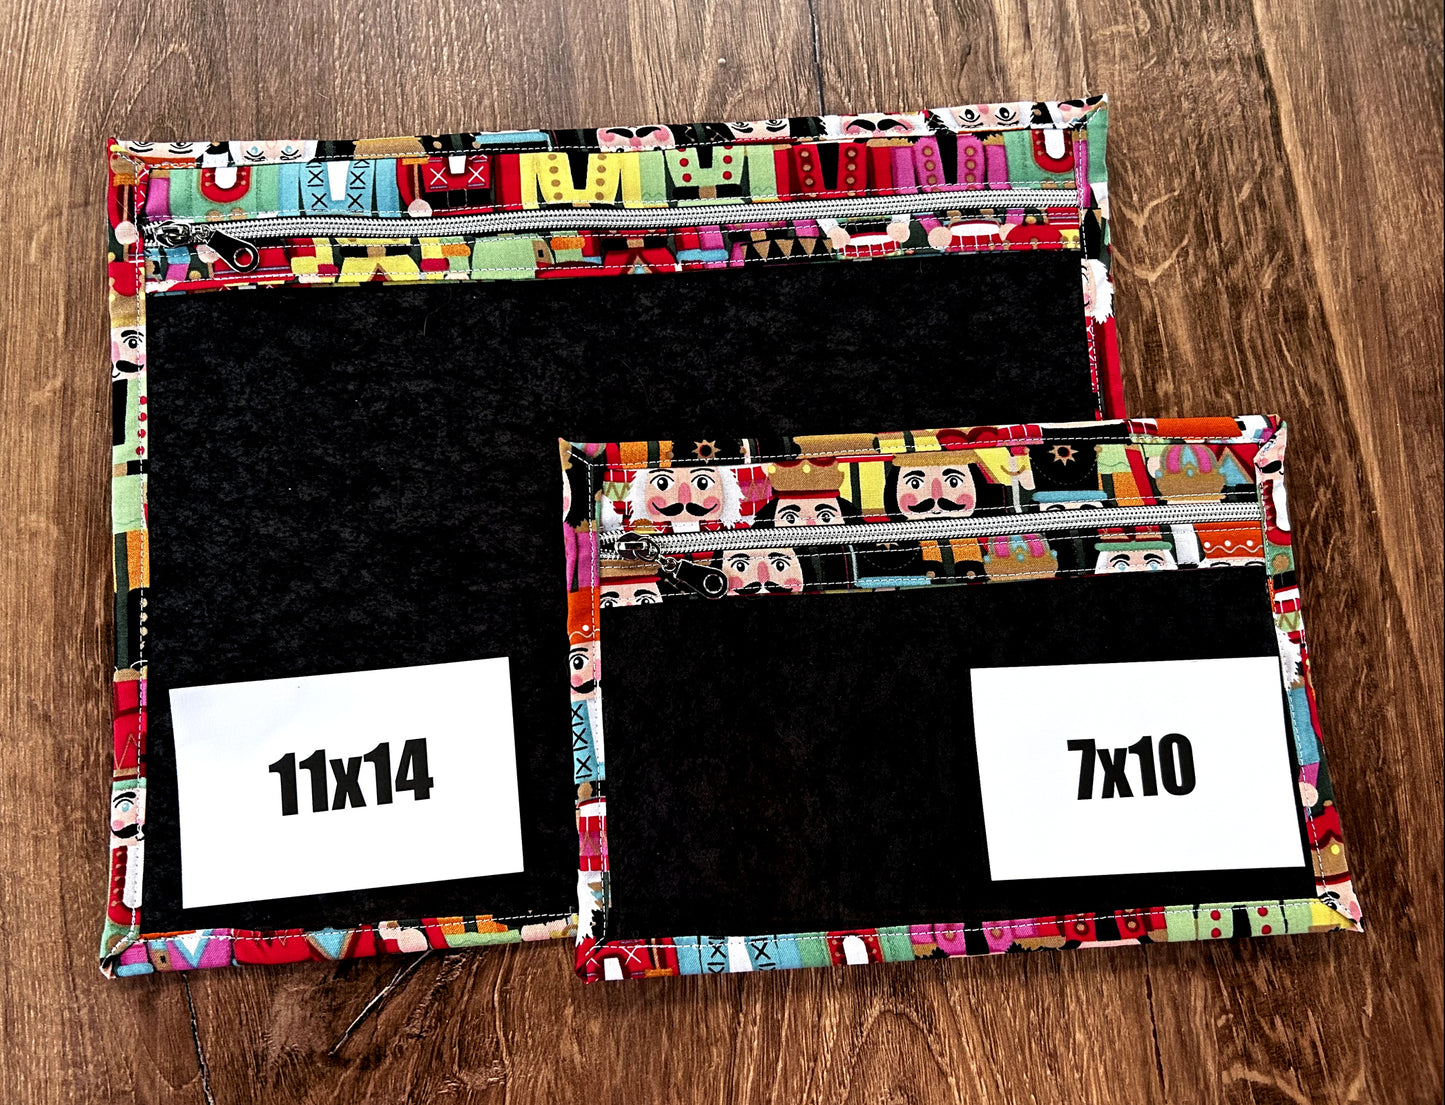 Vinyl Cross Stitch Project Bag - Embroidery bag - Knitting & Crochet Bag - Storage - Organizer - Nutcracker Project Bag - Notions